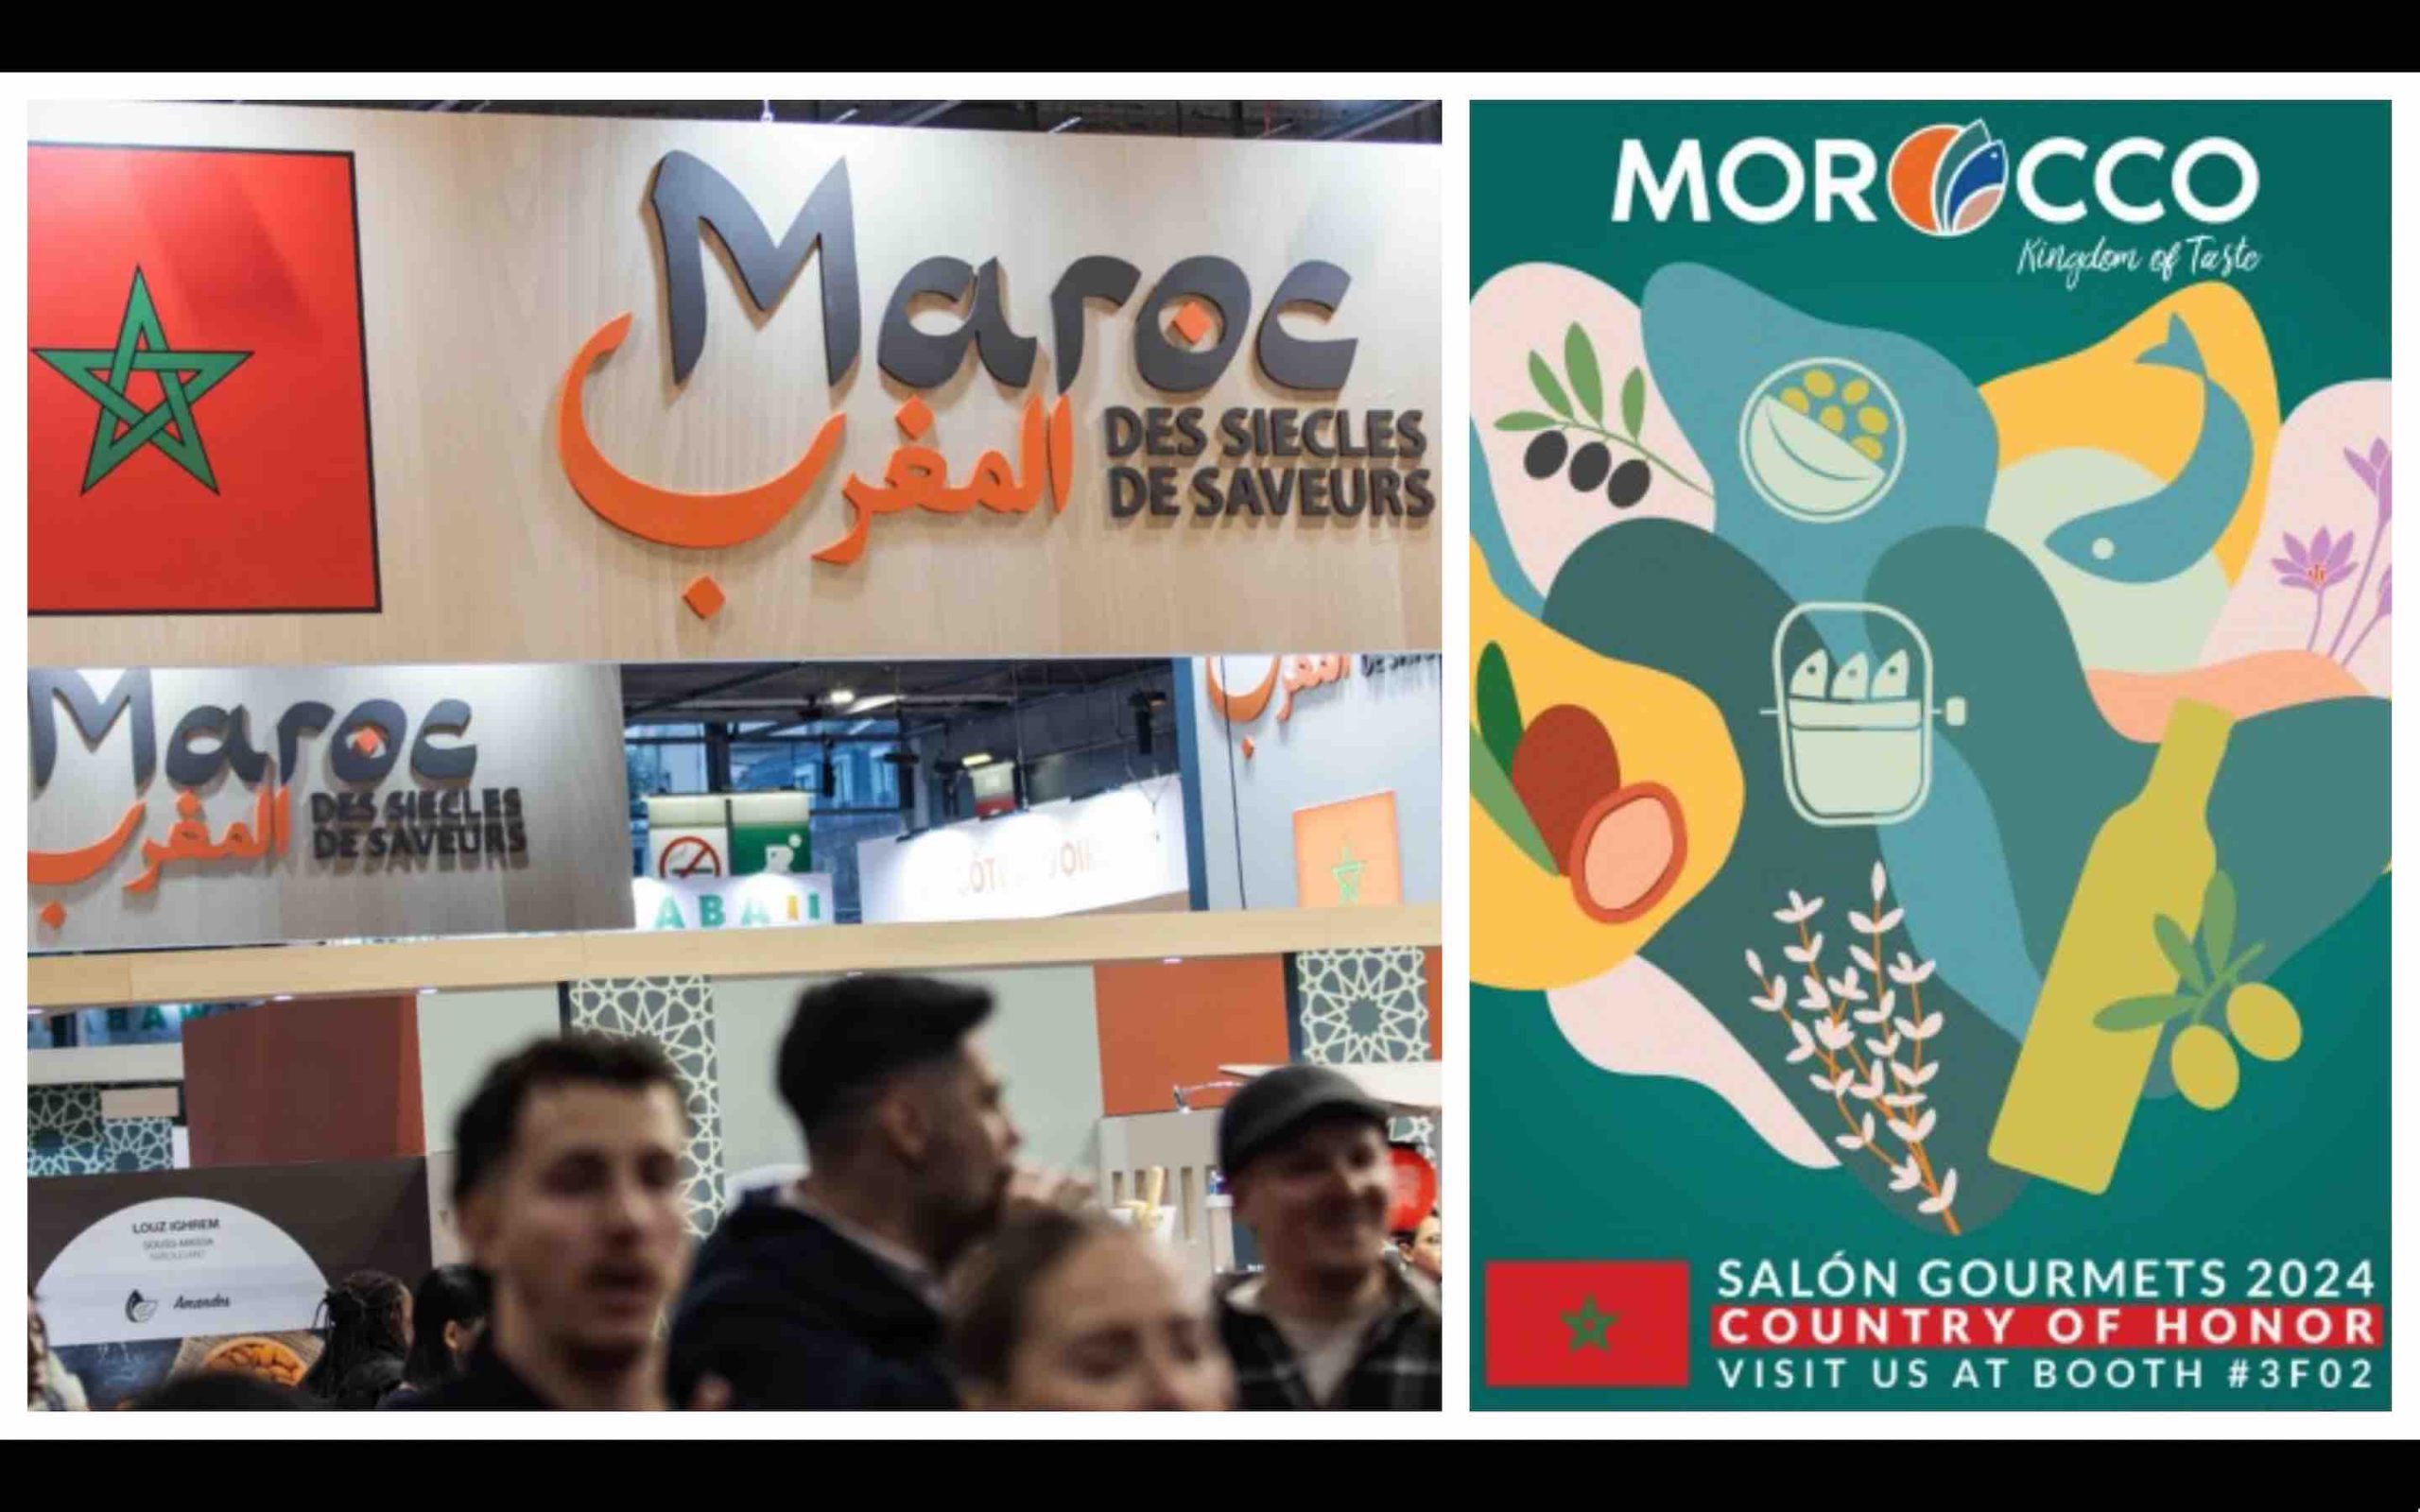 Espagne Maroc Salon Gourmets de Madrid Morocco Spain